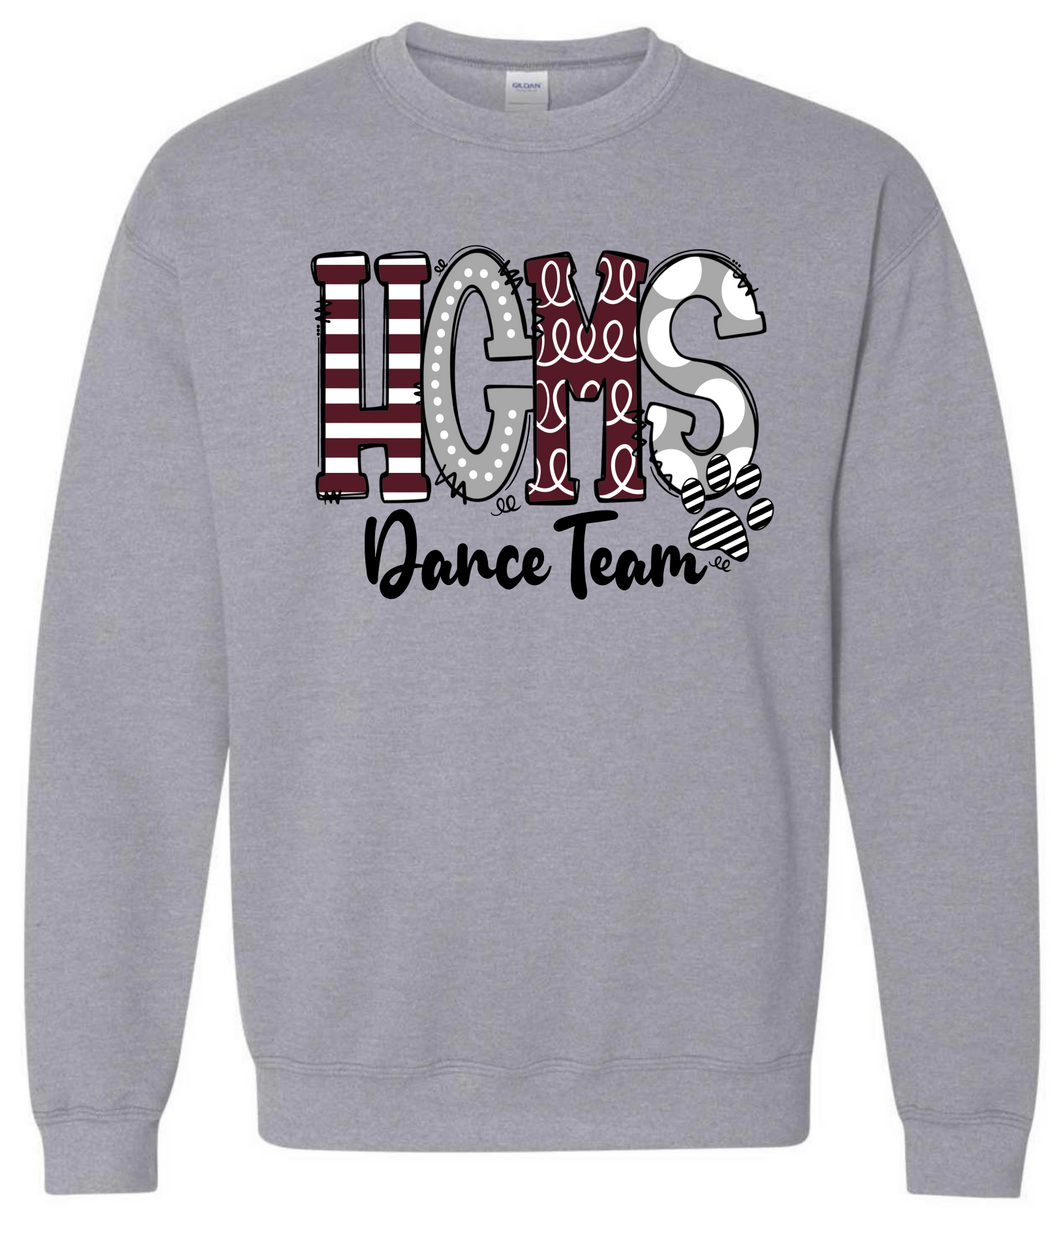 HCMS Dance Team Sweatshirt